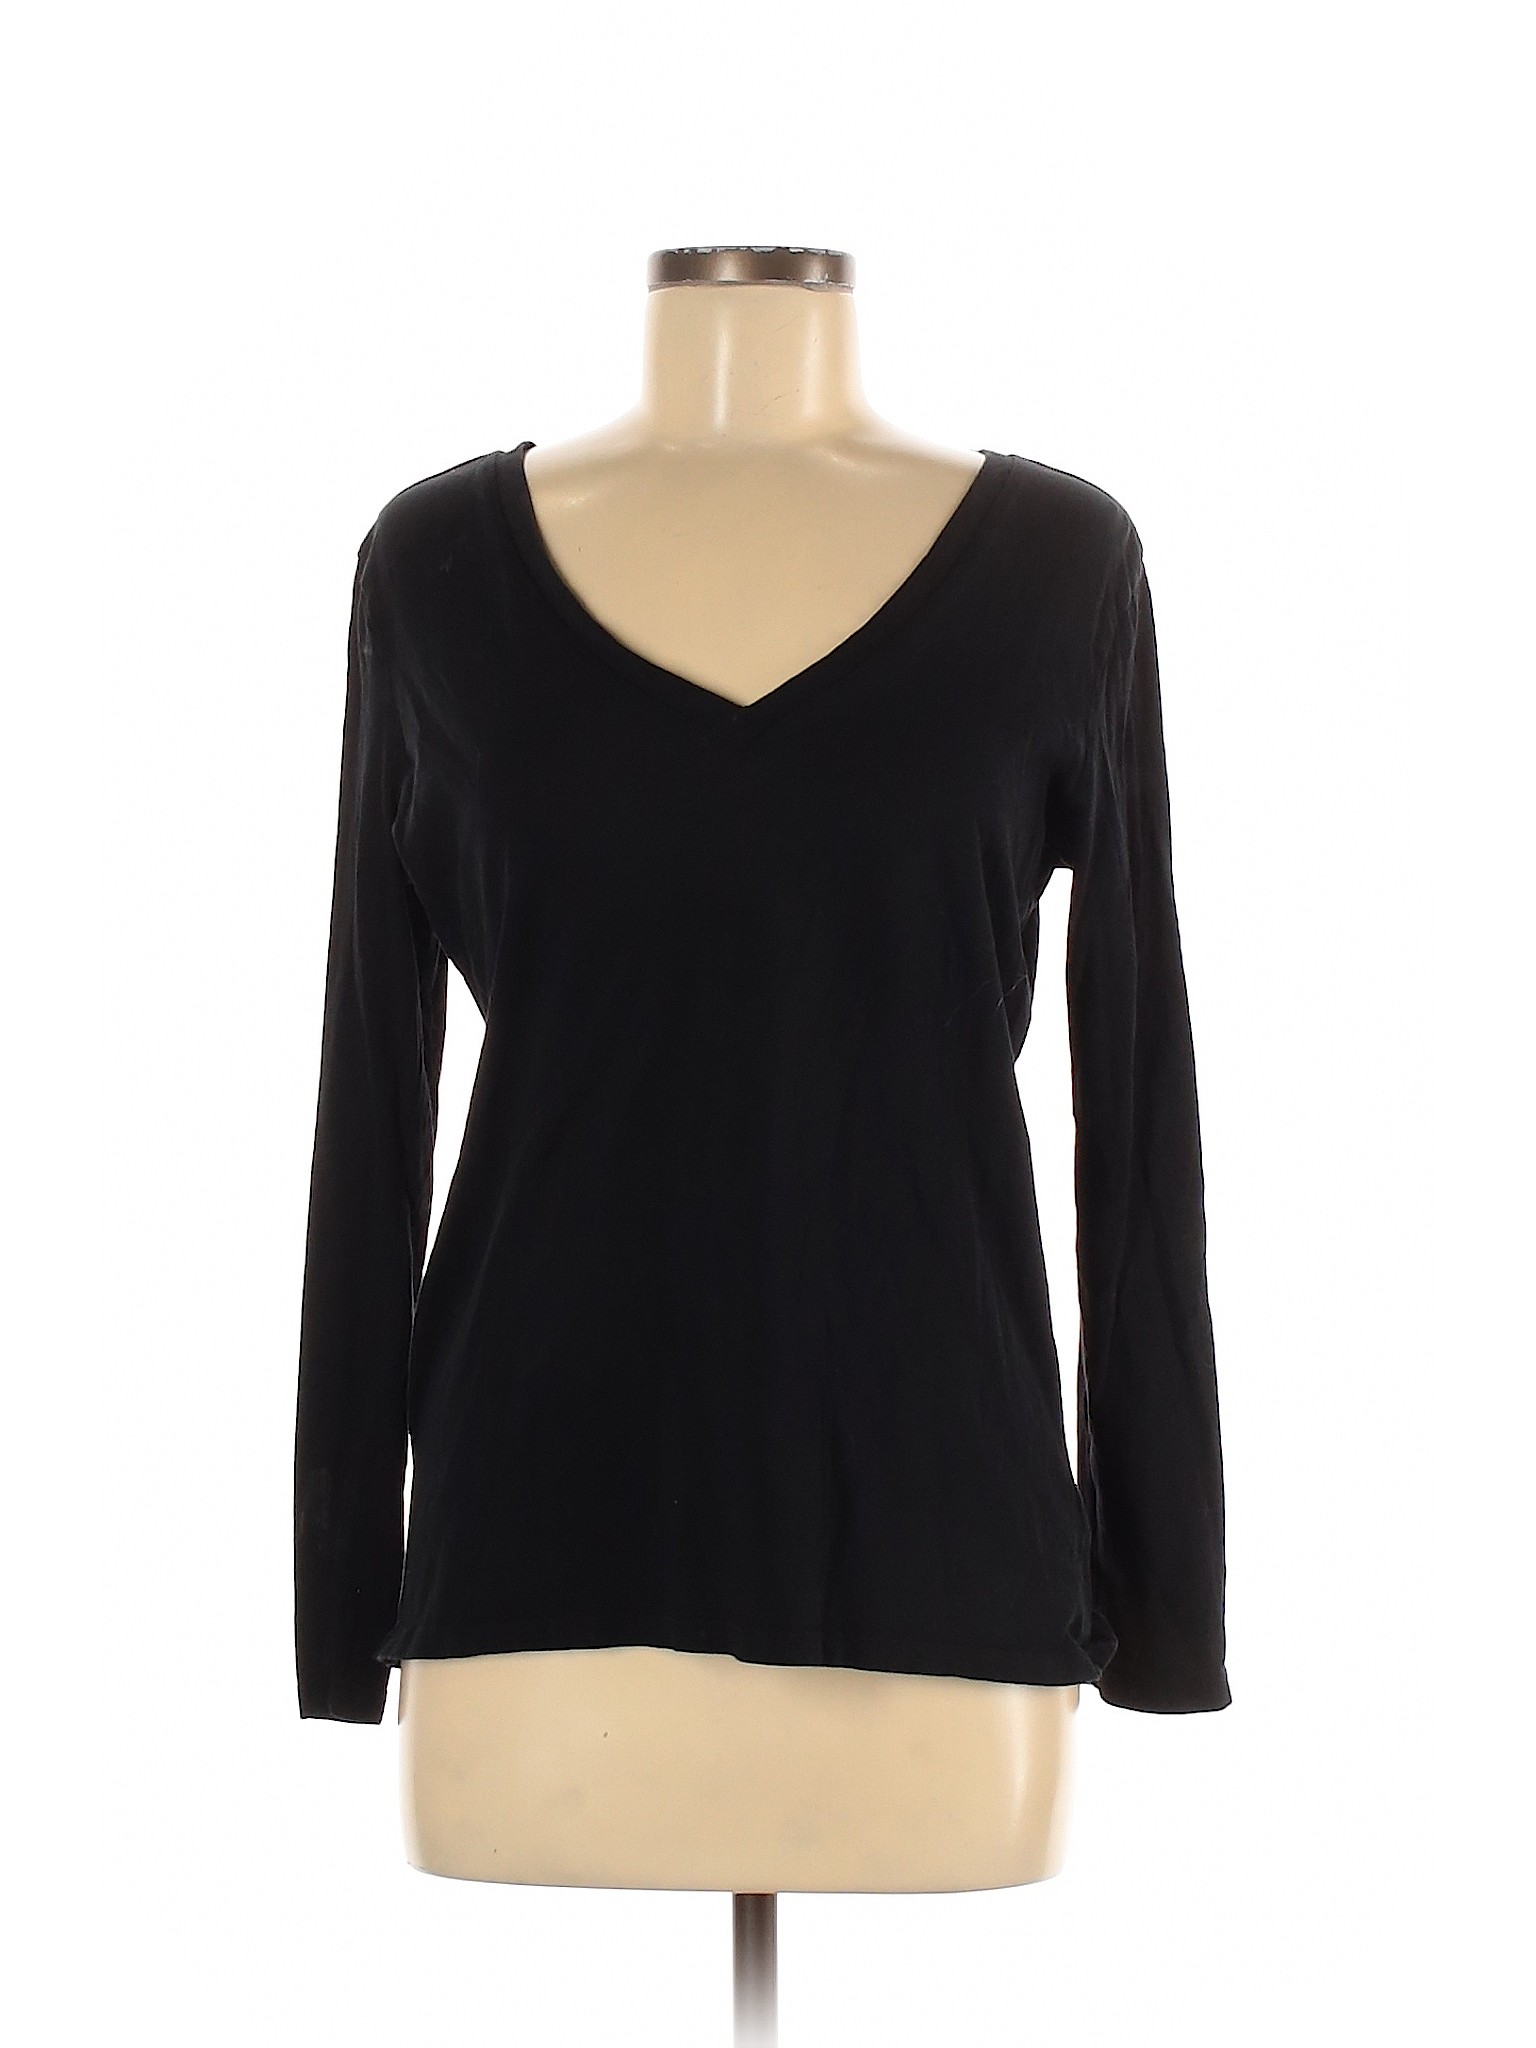 Gap Women Black Long Sleeve T-Shirt M | eBay